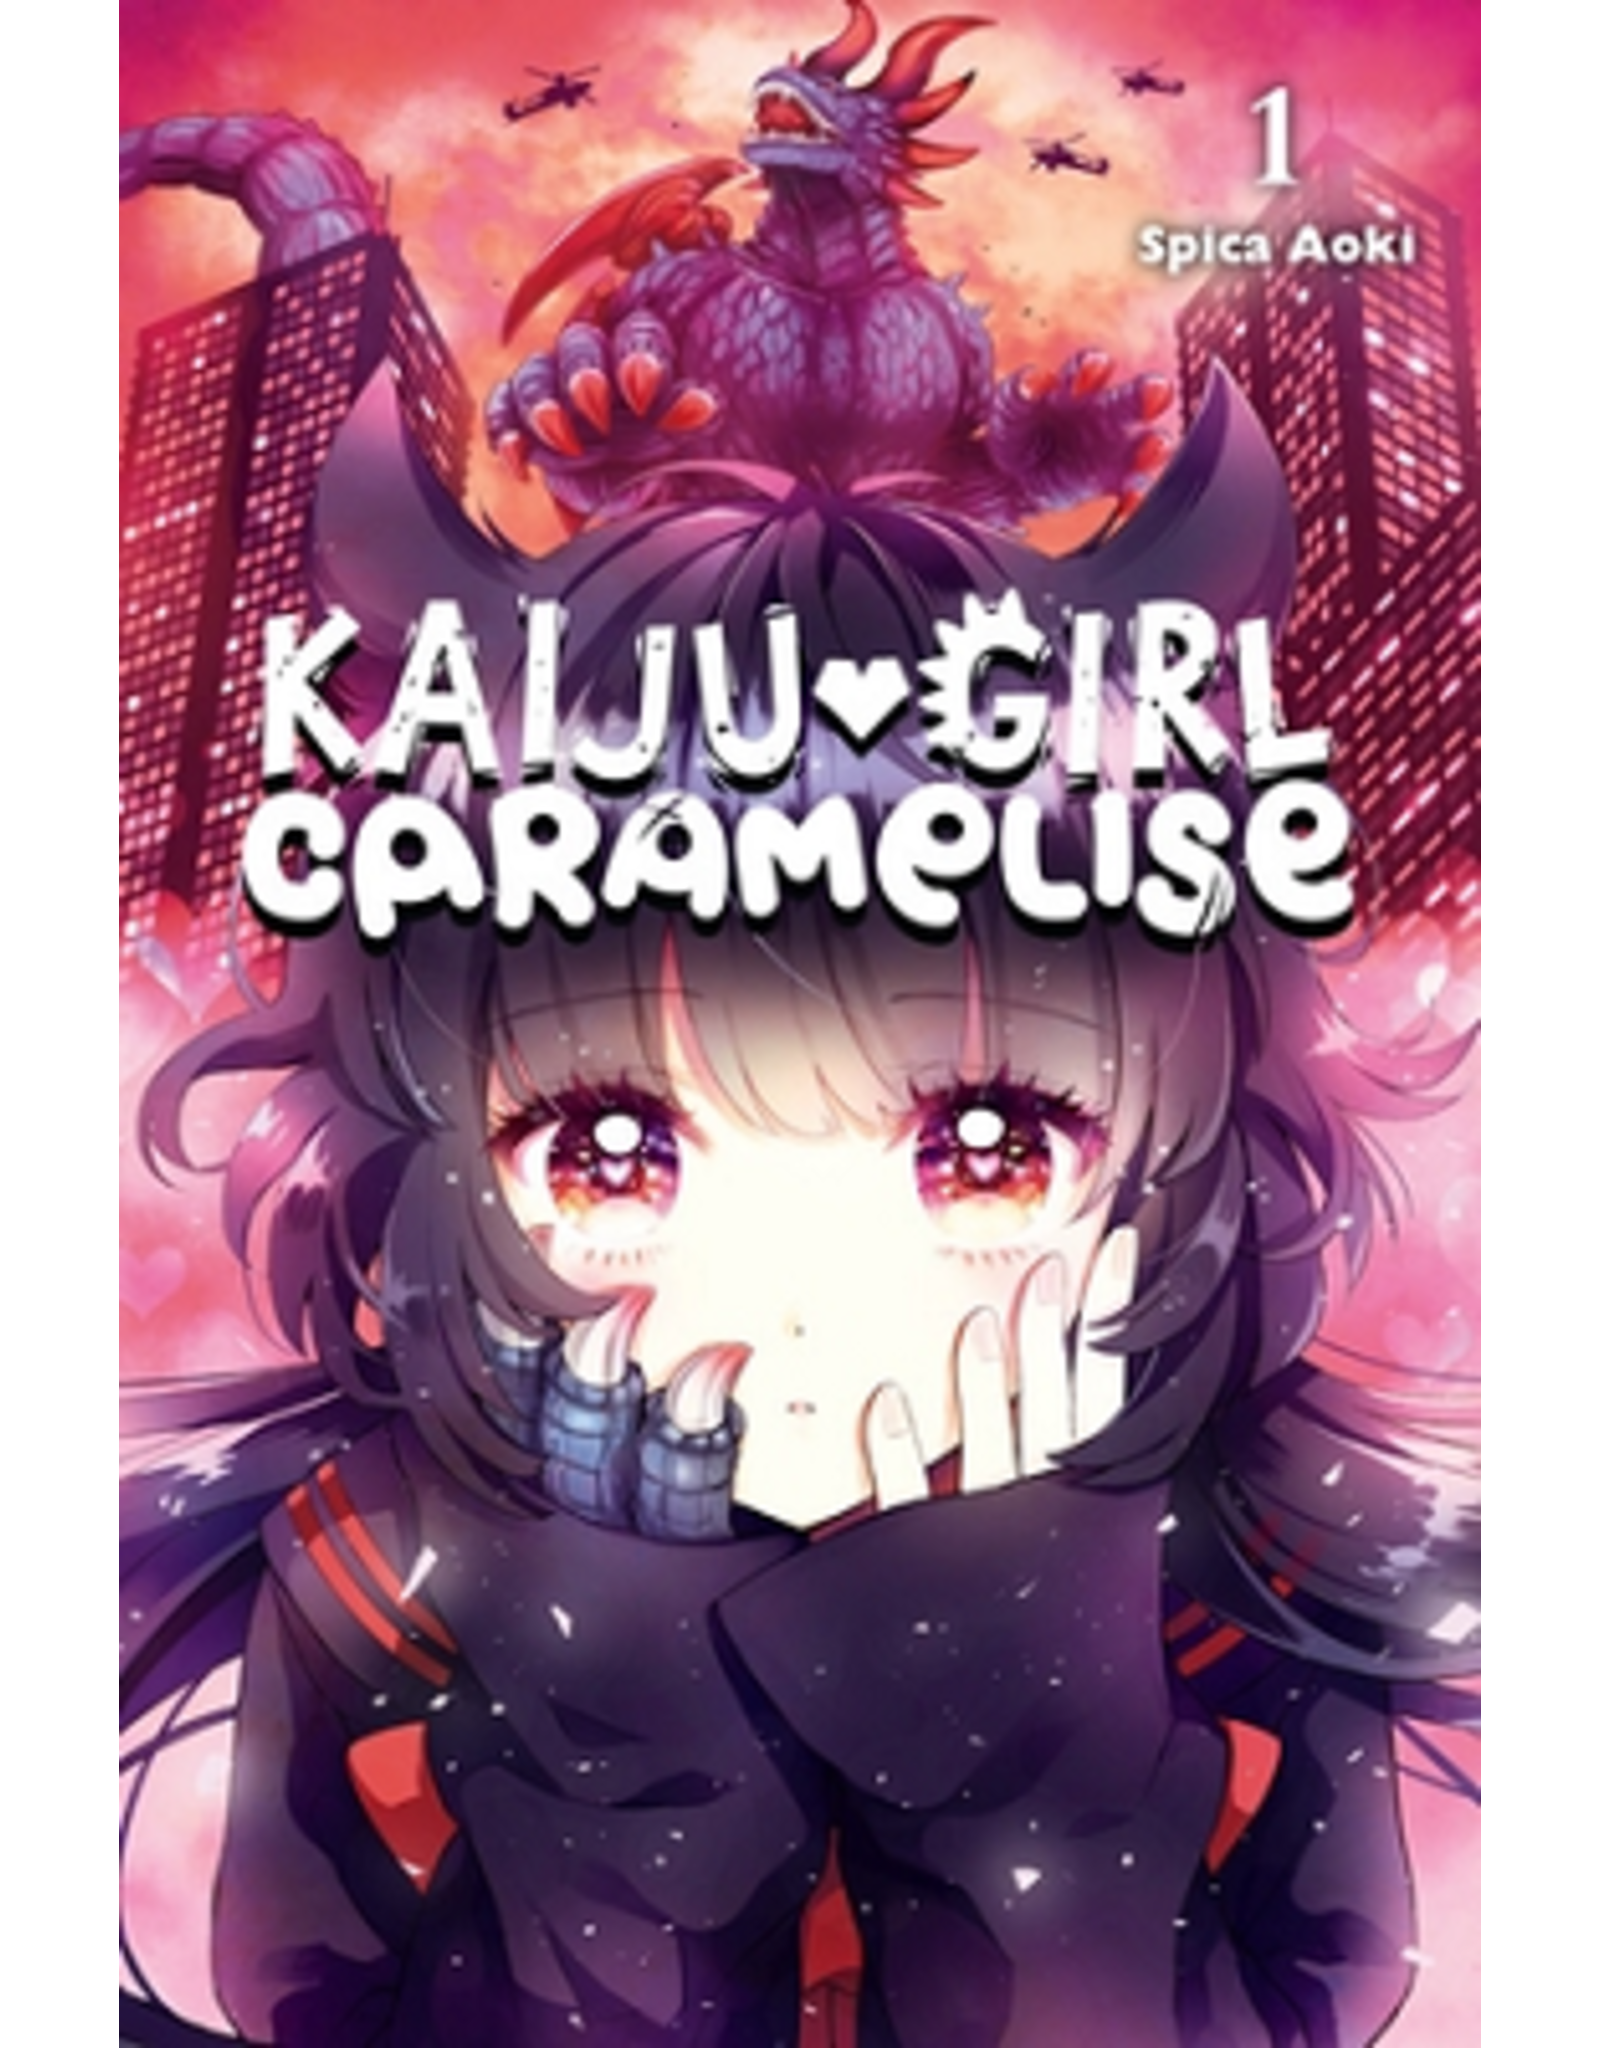 Kaiju Girl Vol. 1-6 Manga Bundle (Used)